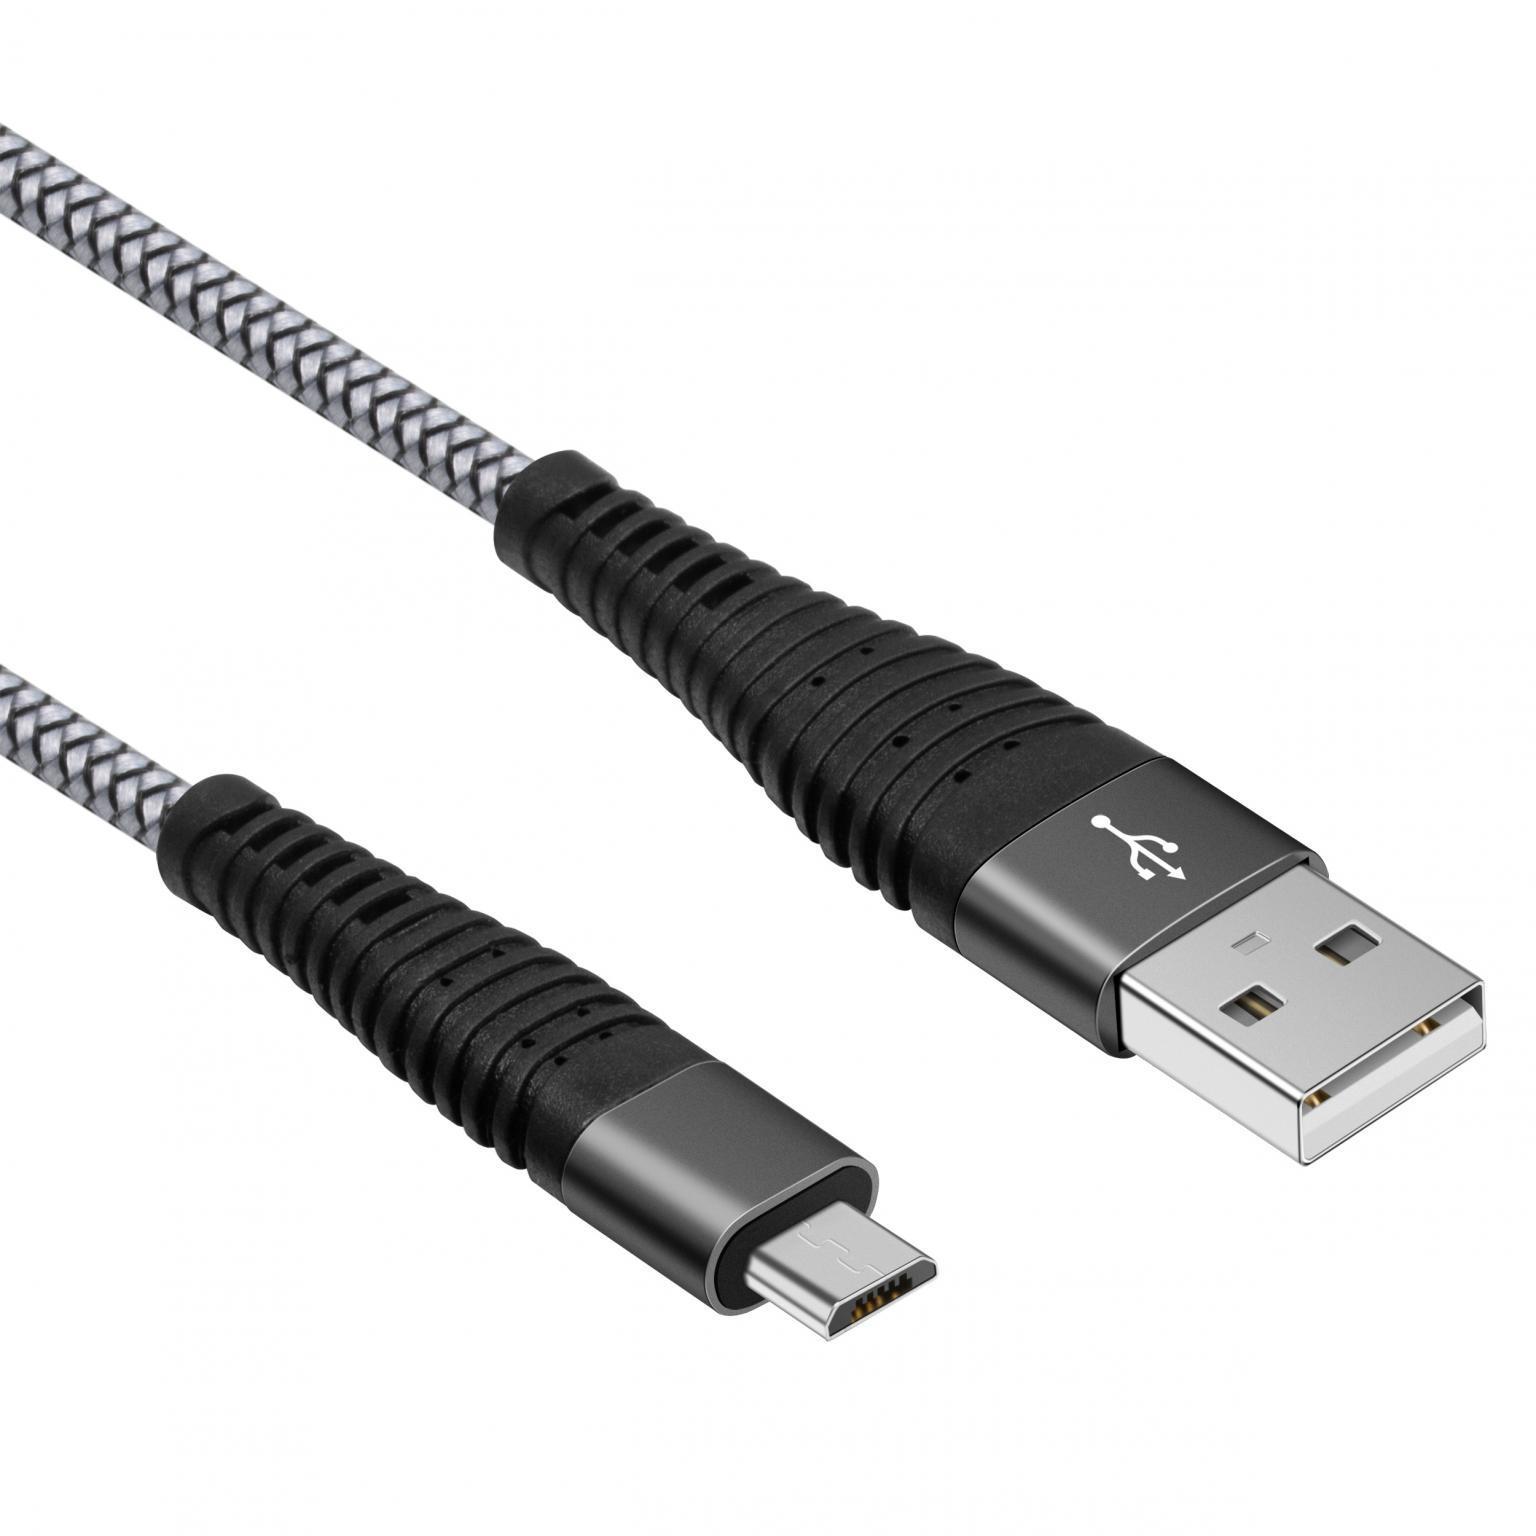 5M (16') Right Angle USB Cable, (CBL-USB5.0M-760F)